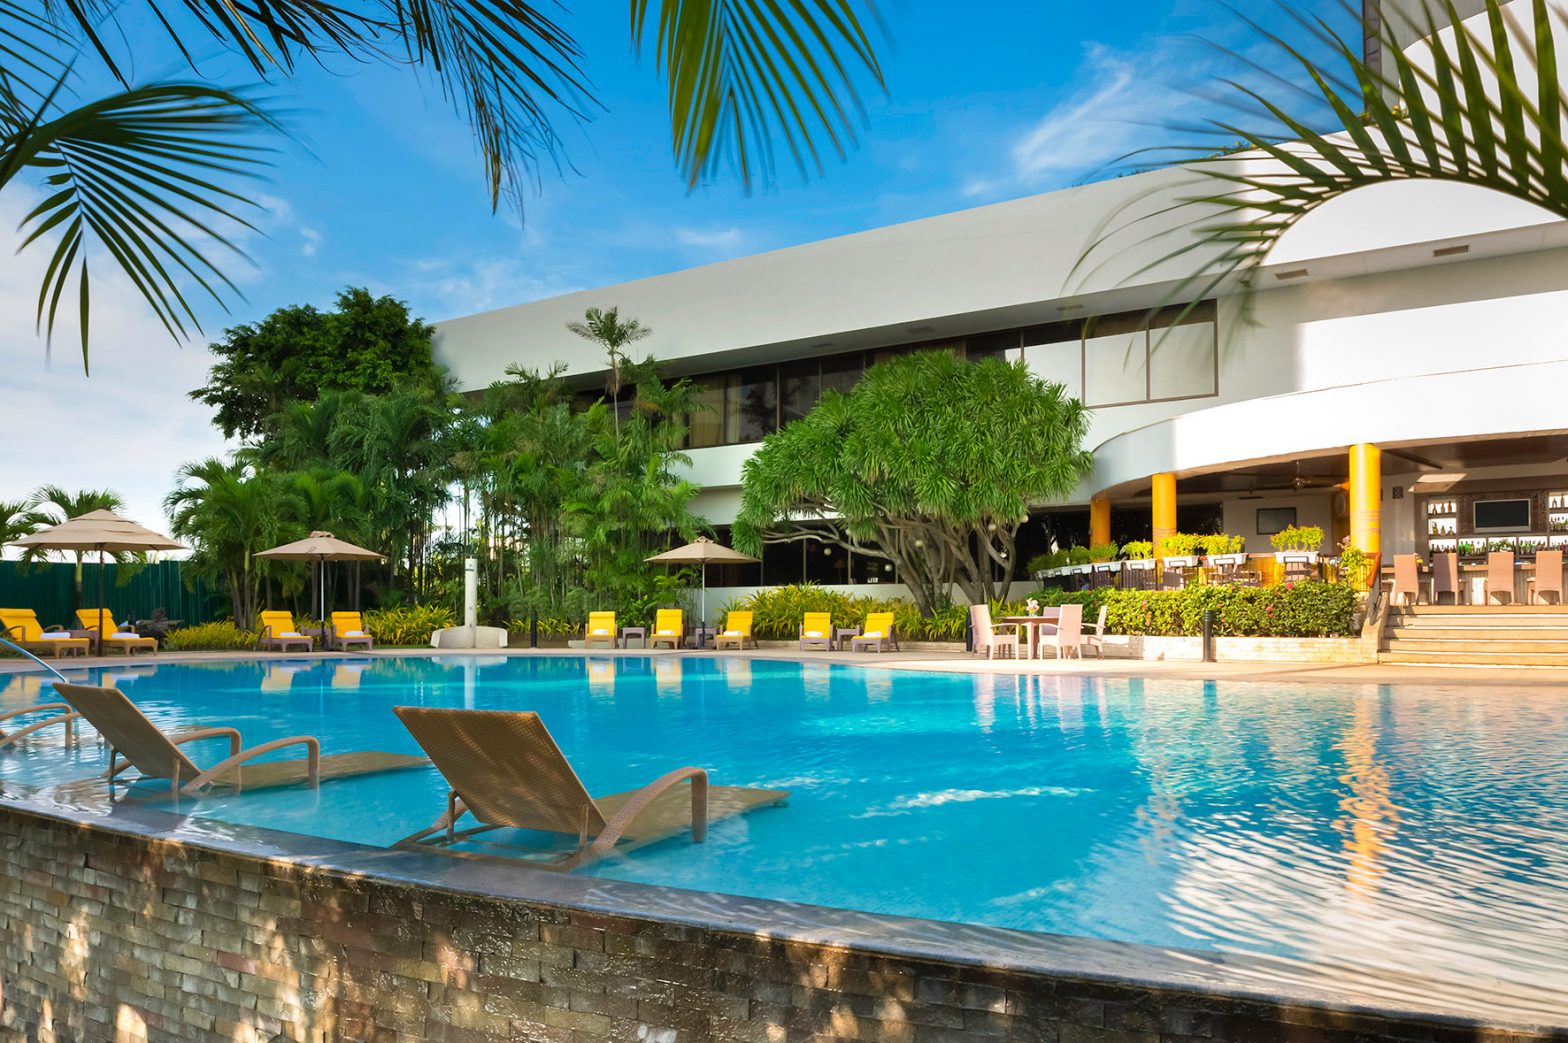 Marco Polo Plaza joins Cebu Travel Catalogue International 2019